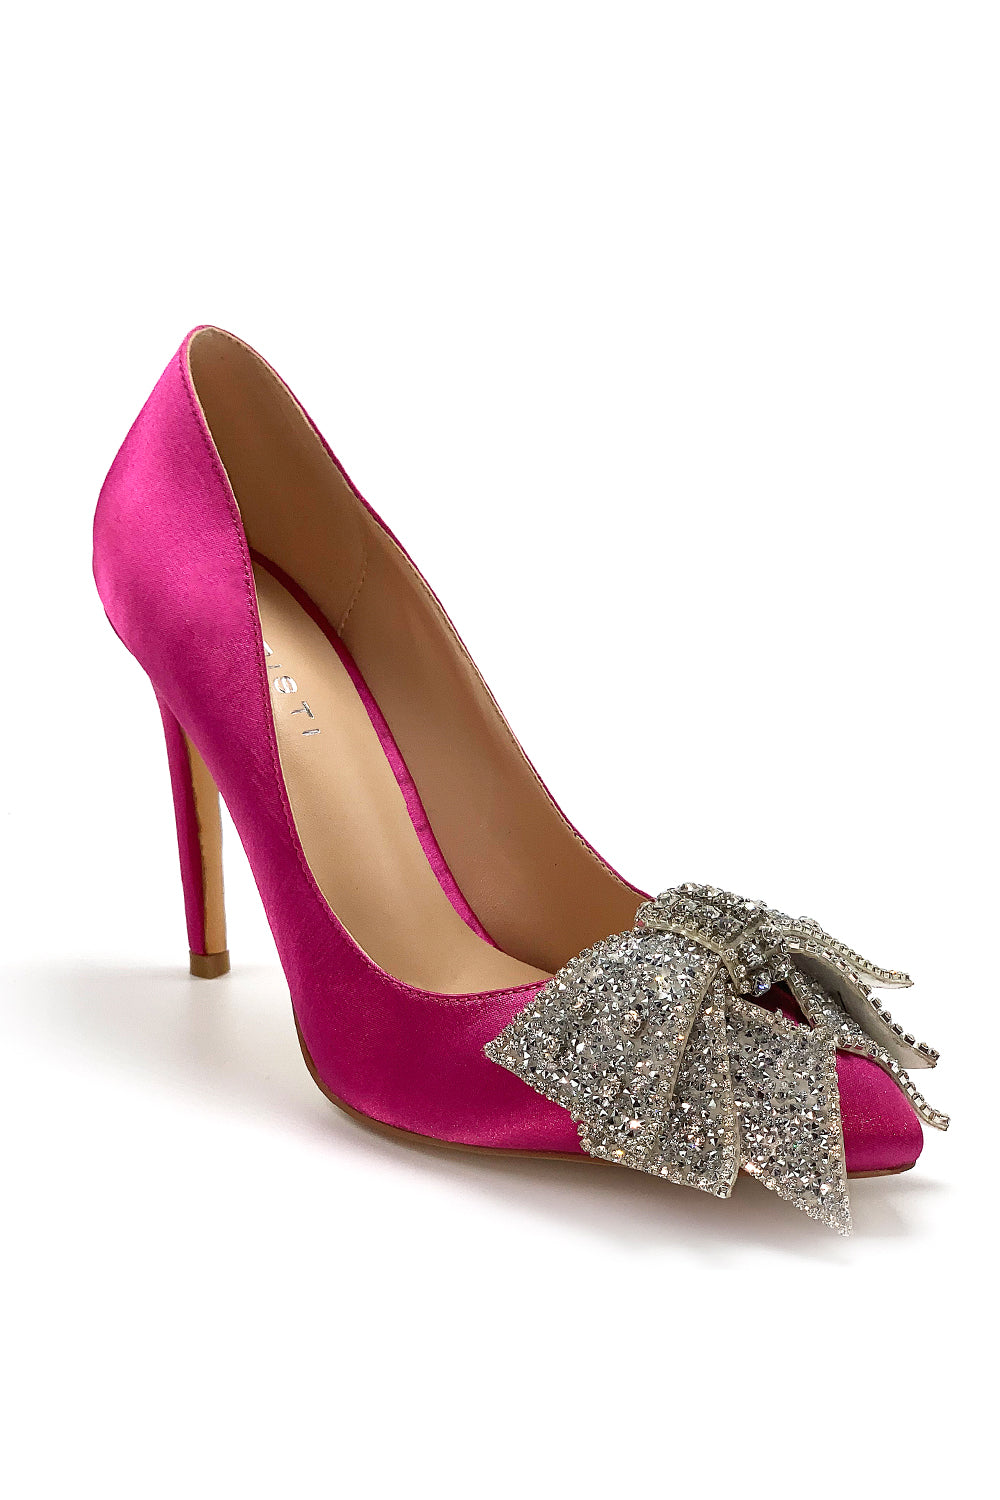 Danger Stiletto Heels - Hot Pink Metallic – Sheriton Shoes